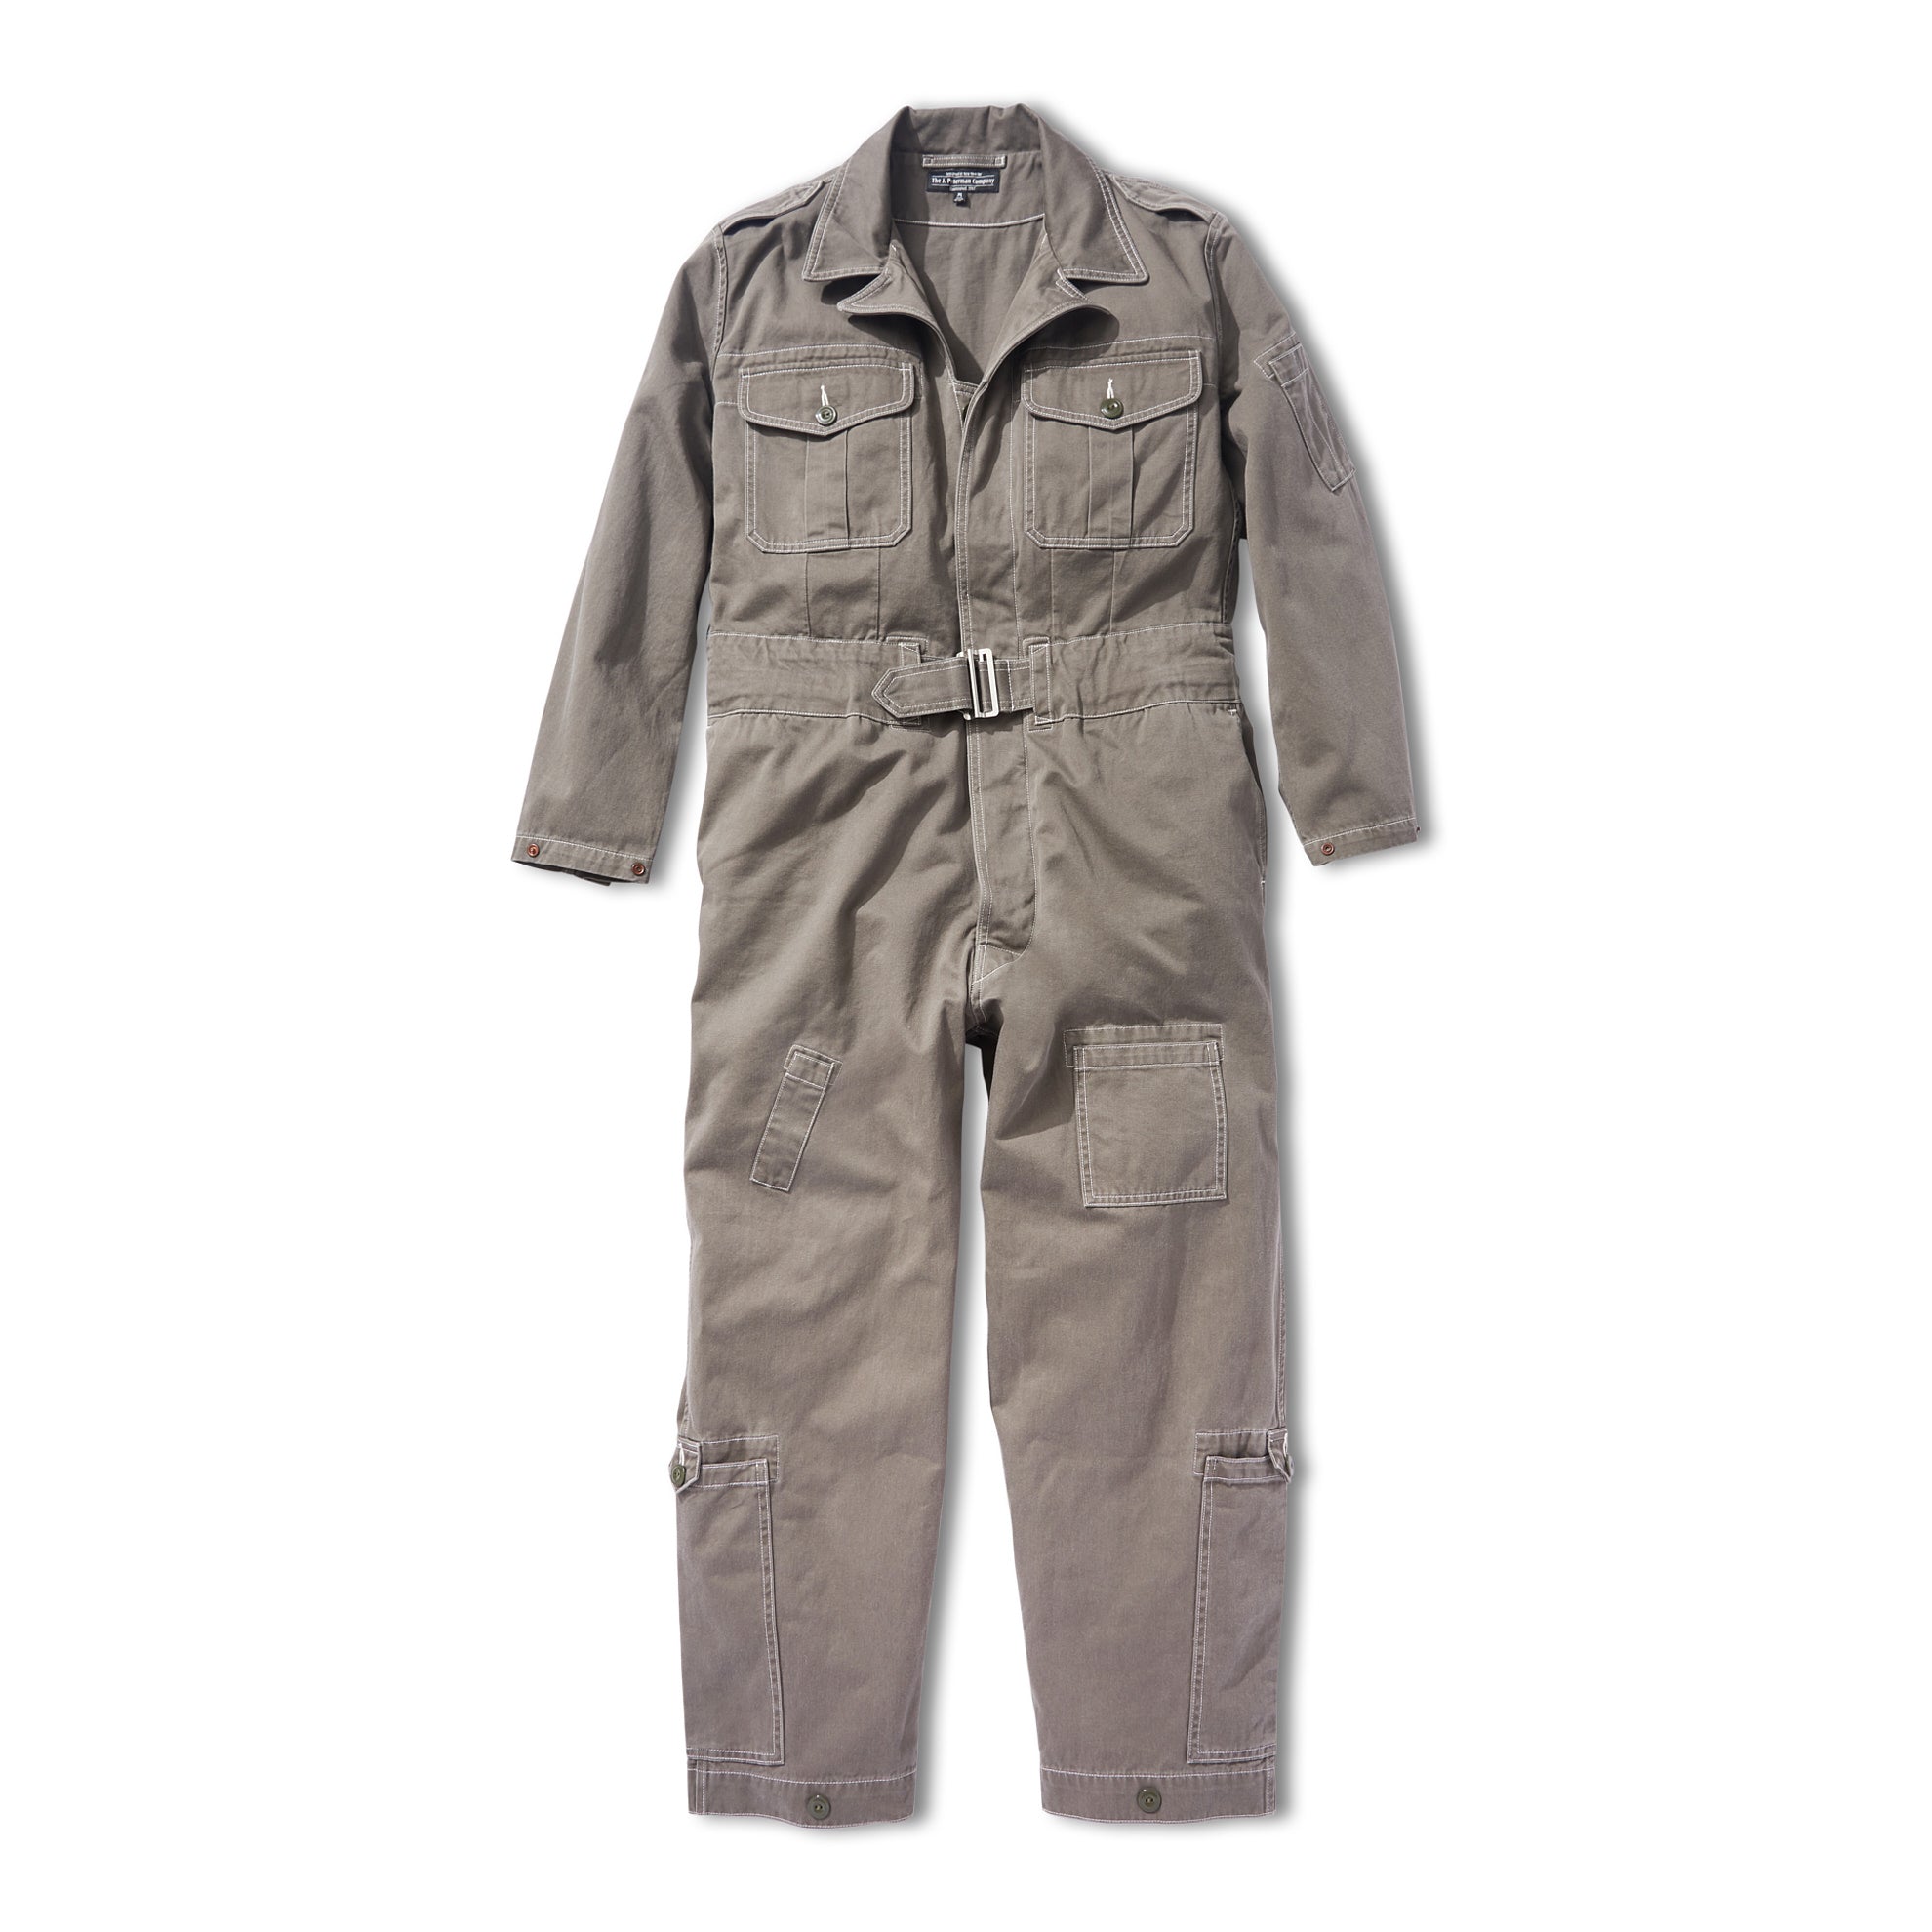 RAF Flight Suit – The J. Peterman Company